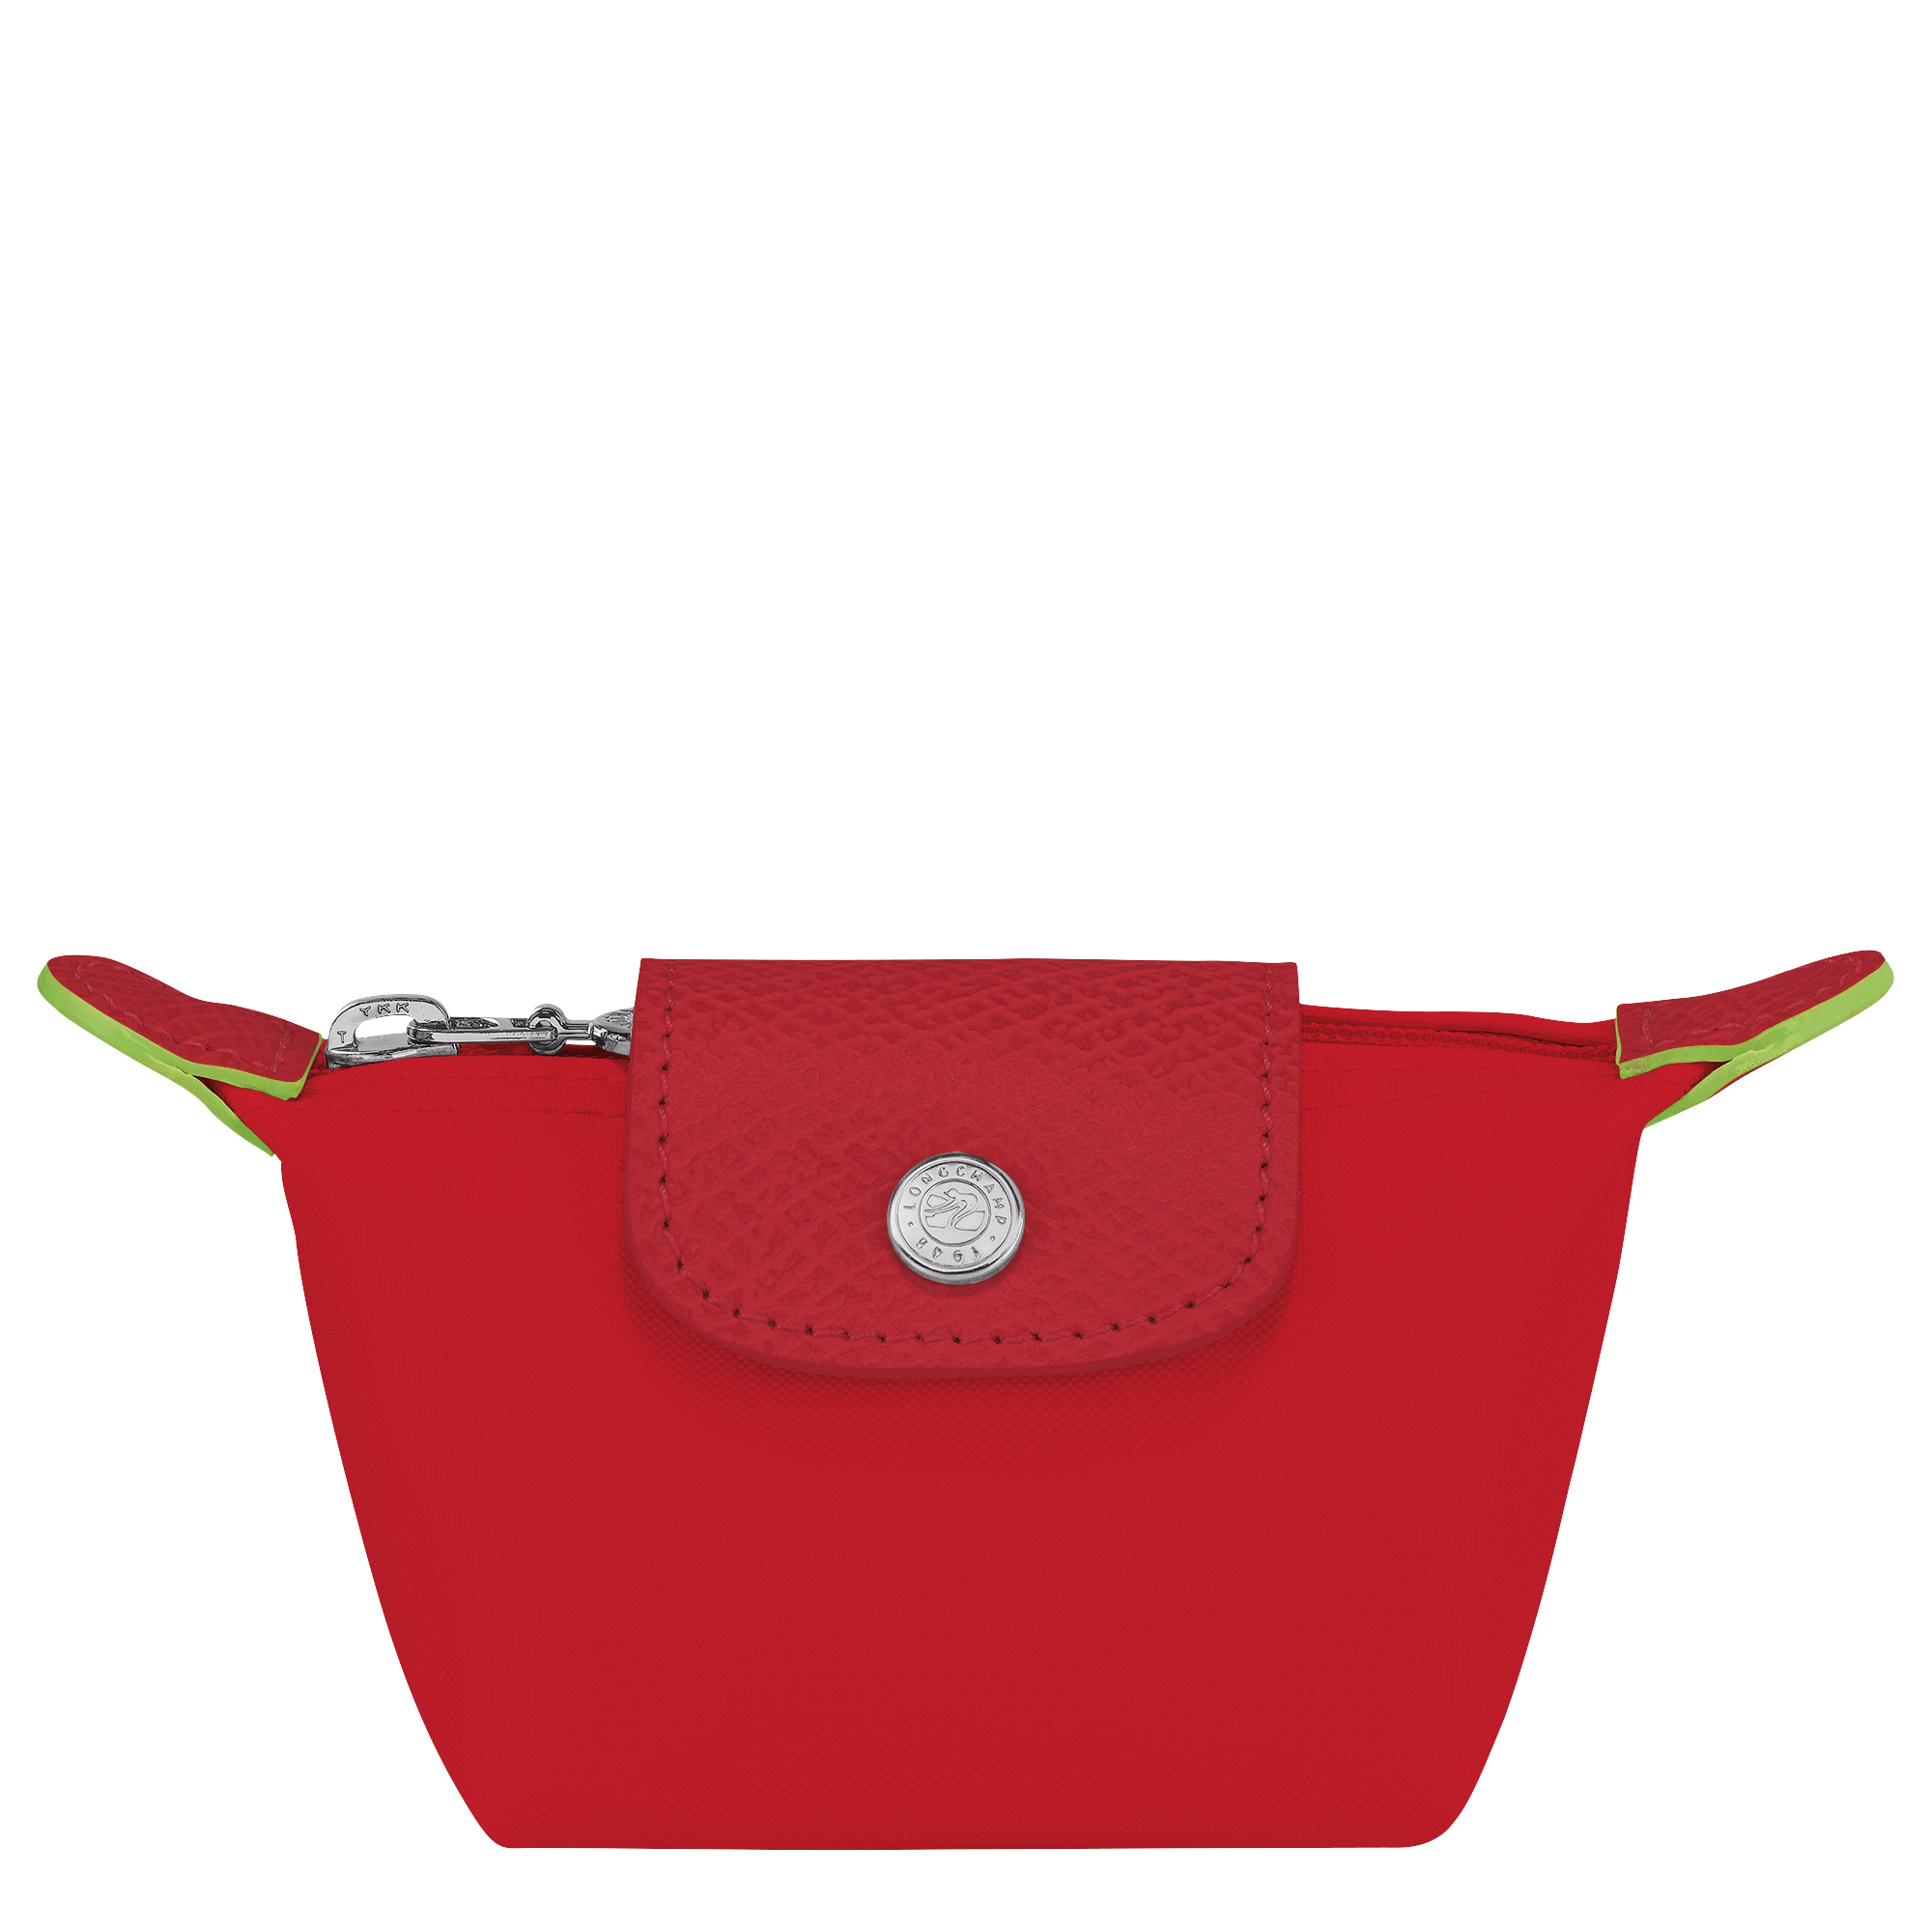 Le Pliage Green Coin purse, Tomato